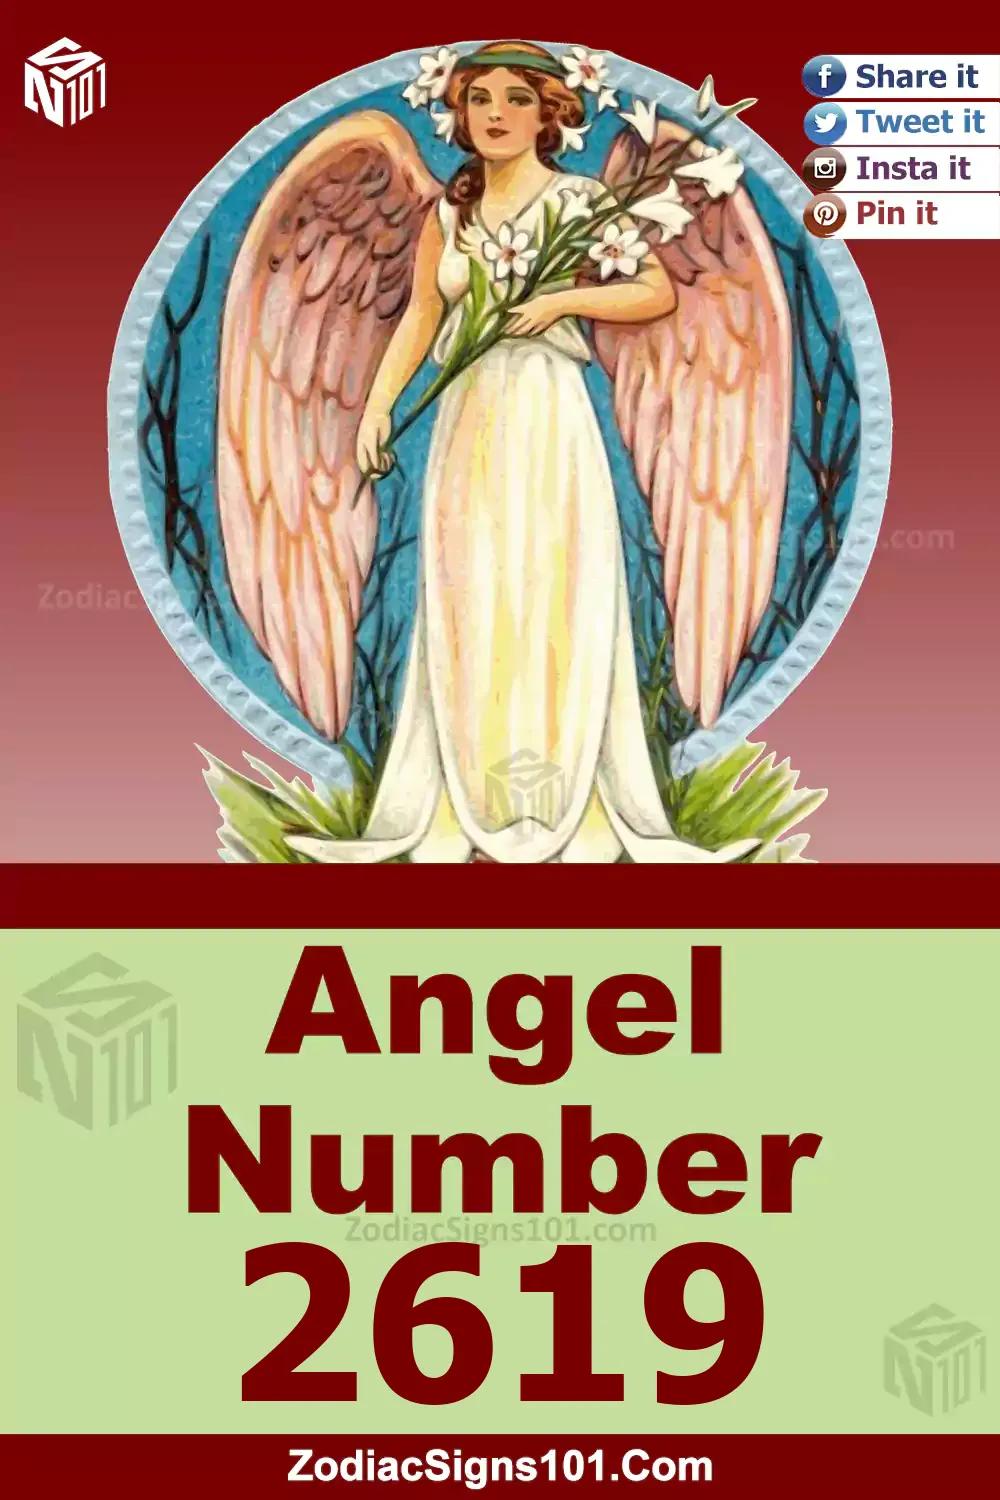 2619-Angel-Number-Meaning.jpg